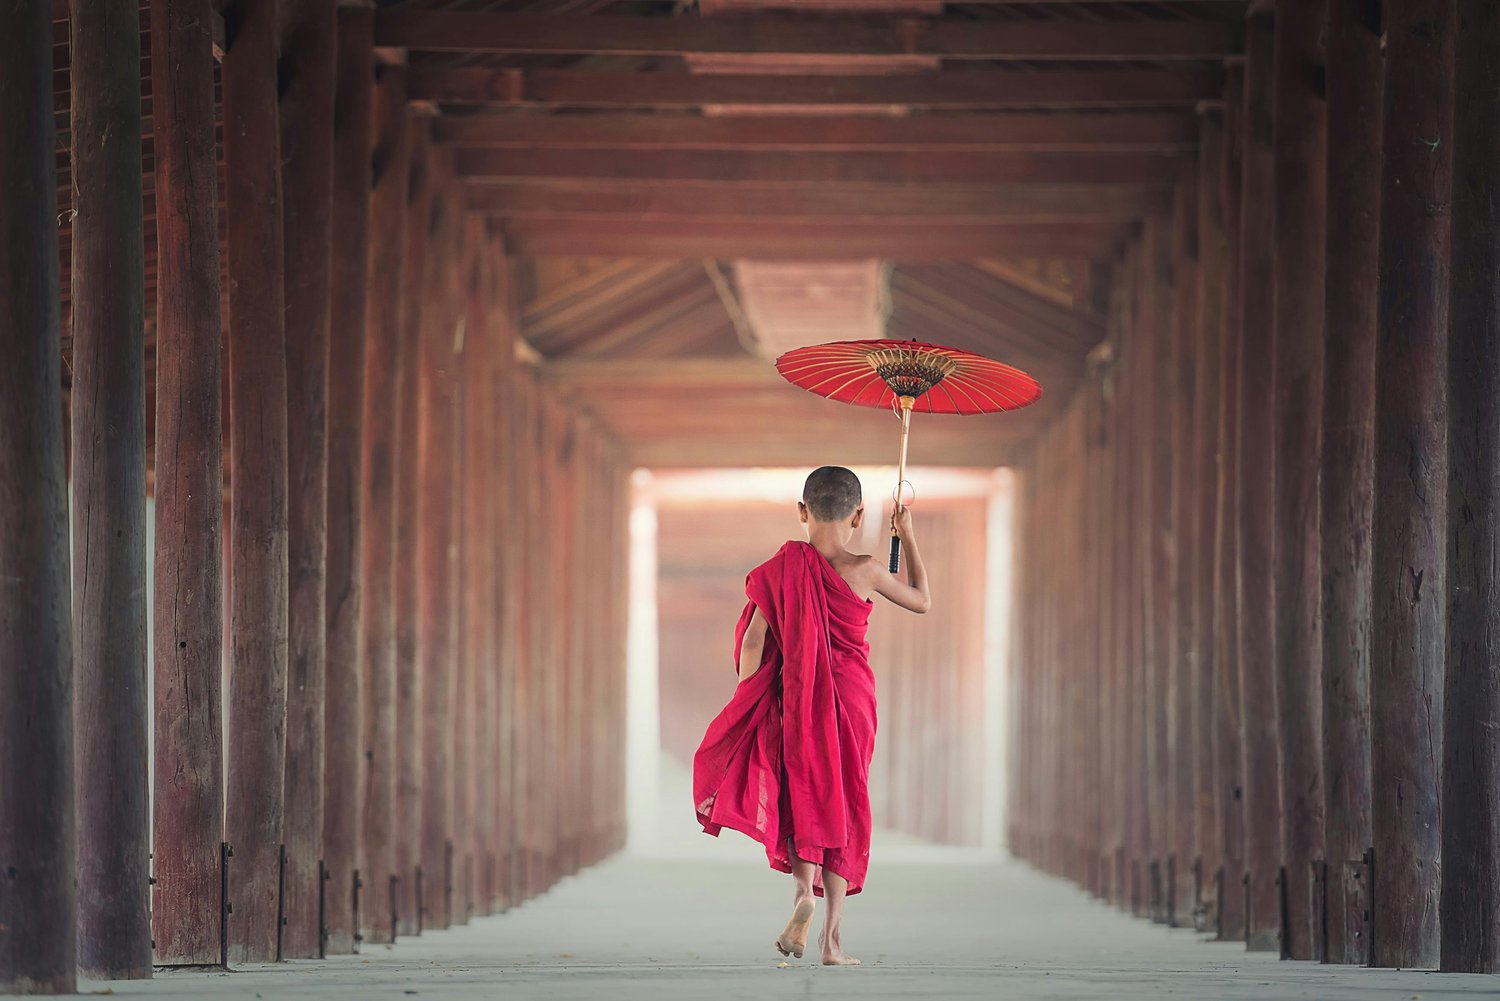 Girl walking through archeways in Asia.